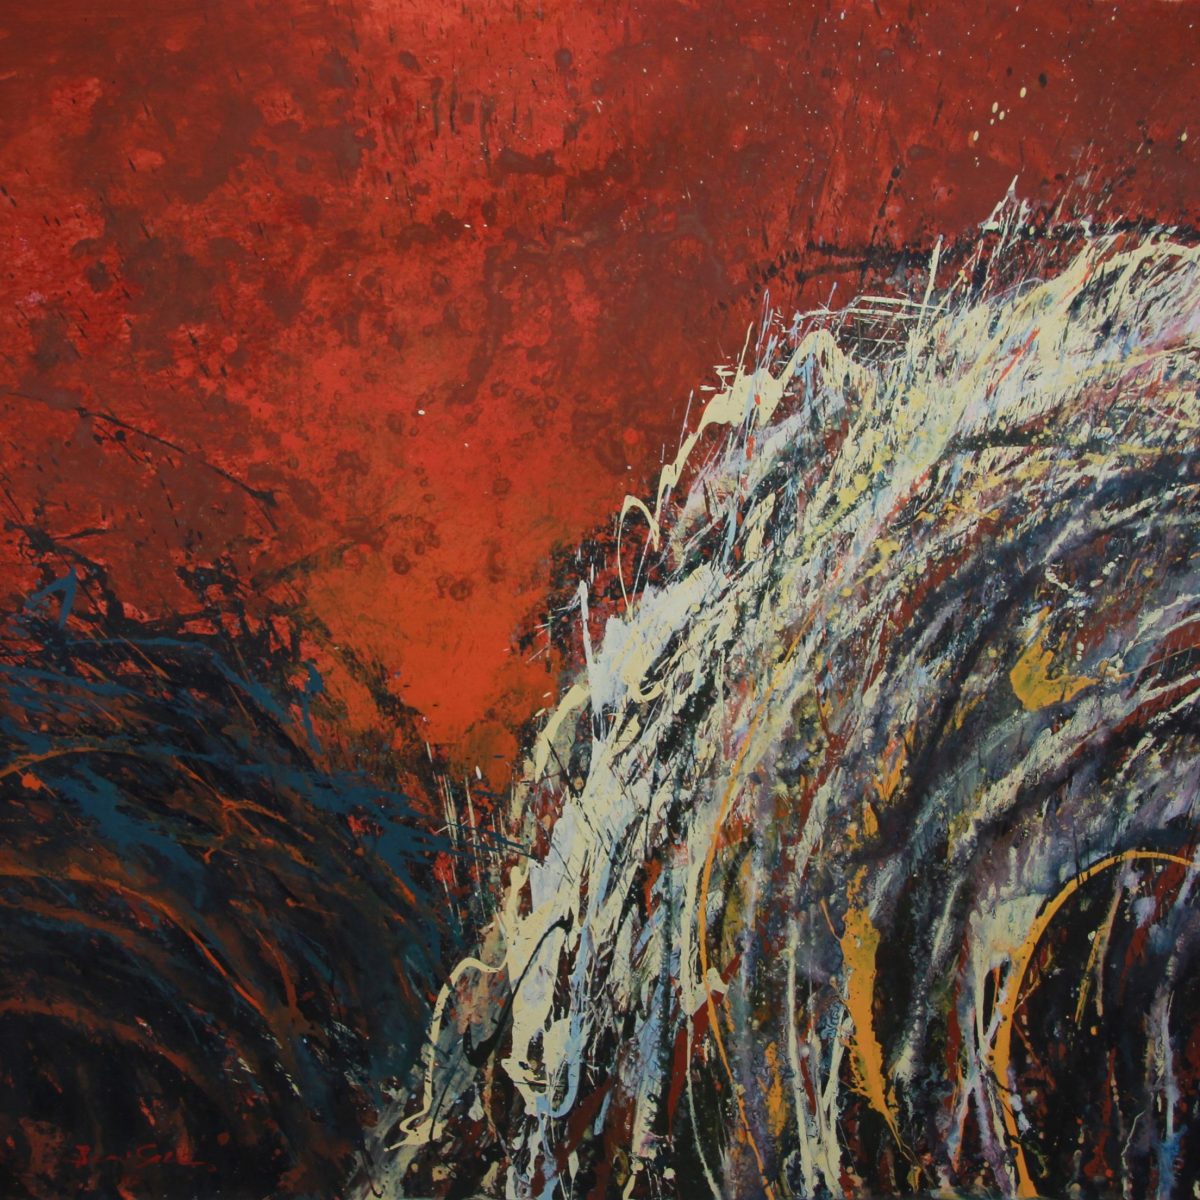 EXODUS: RED SEA, acrylic on canvas, 72"x86", 2014